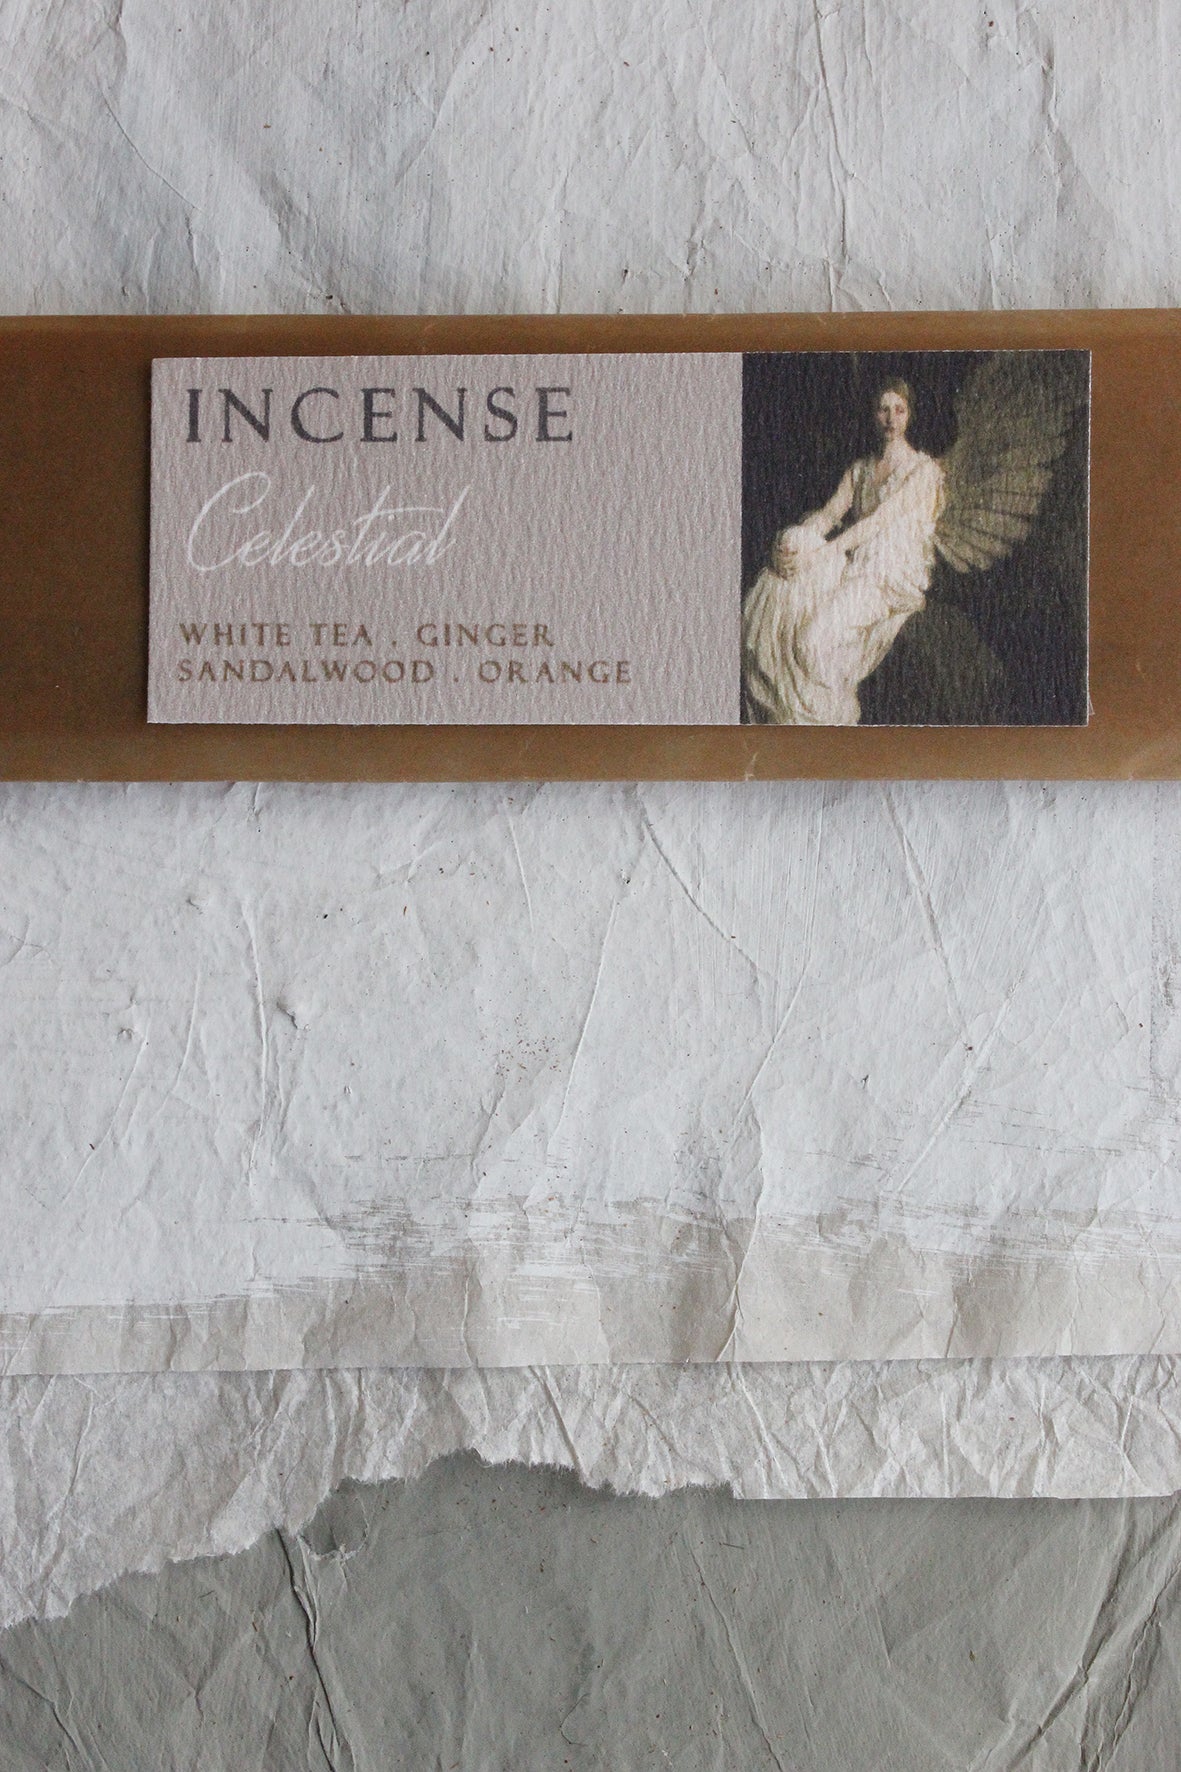 Incense - "Celestial"